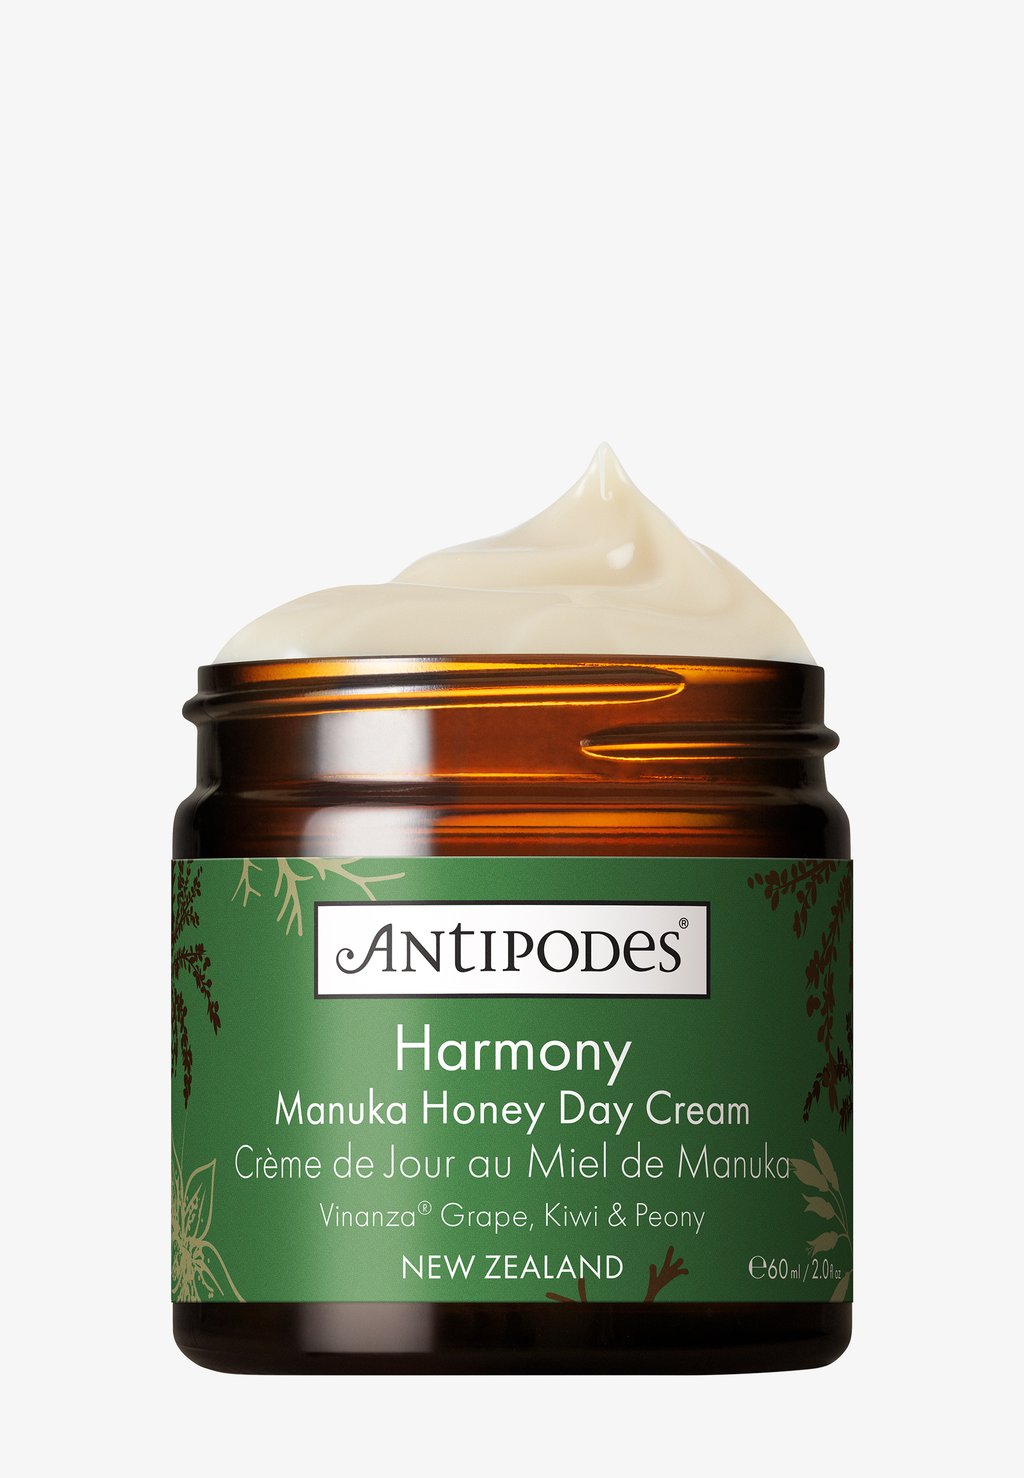 Дневной крем Harmony Manuka Honey Day Cream Antipodes